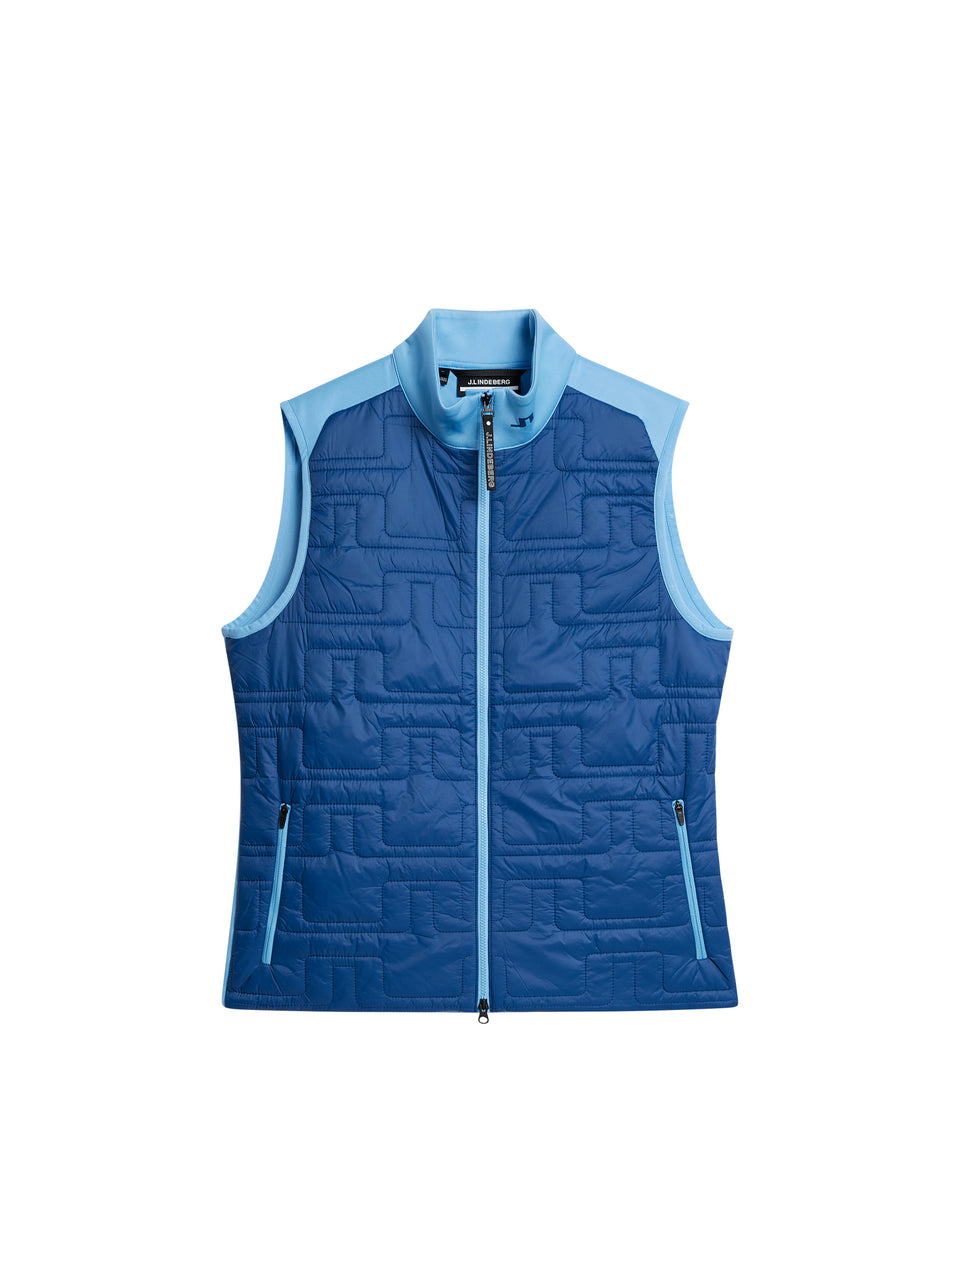 W Quilt Hybrid Vest / Estate Blue